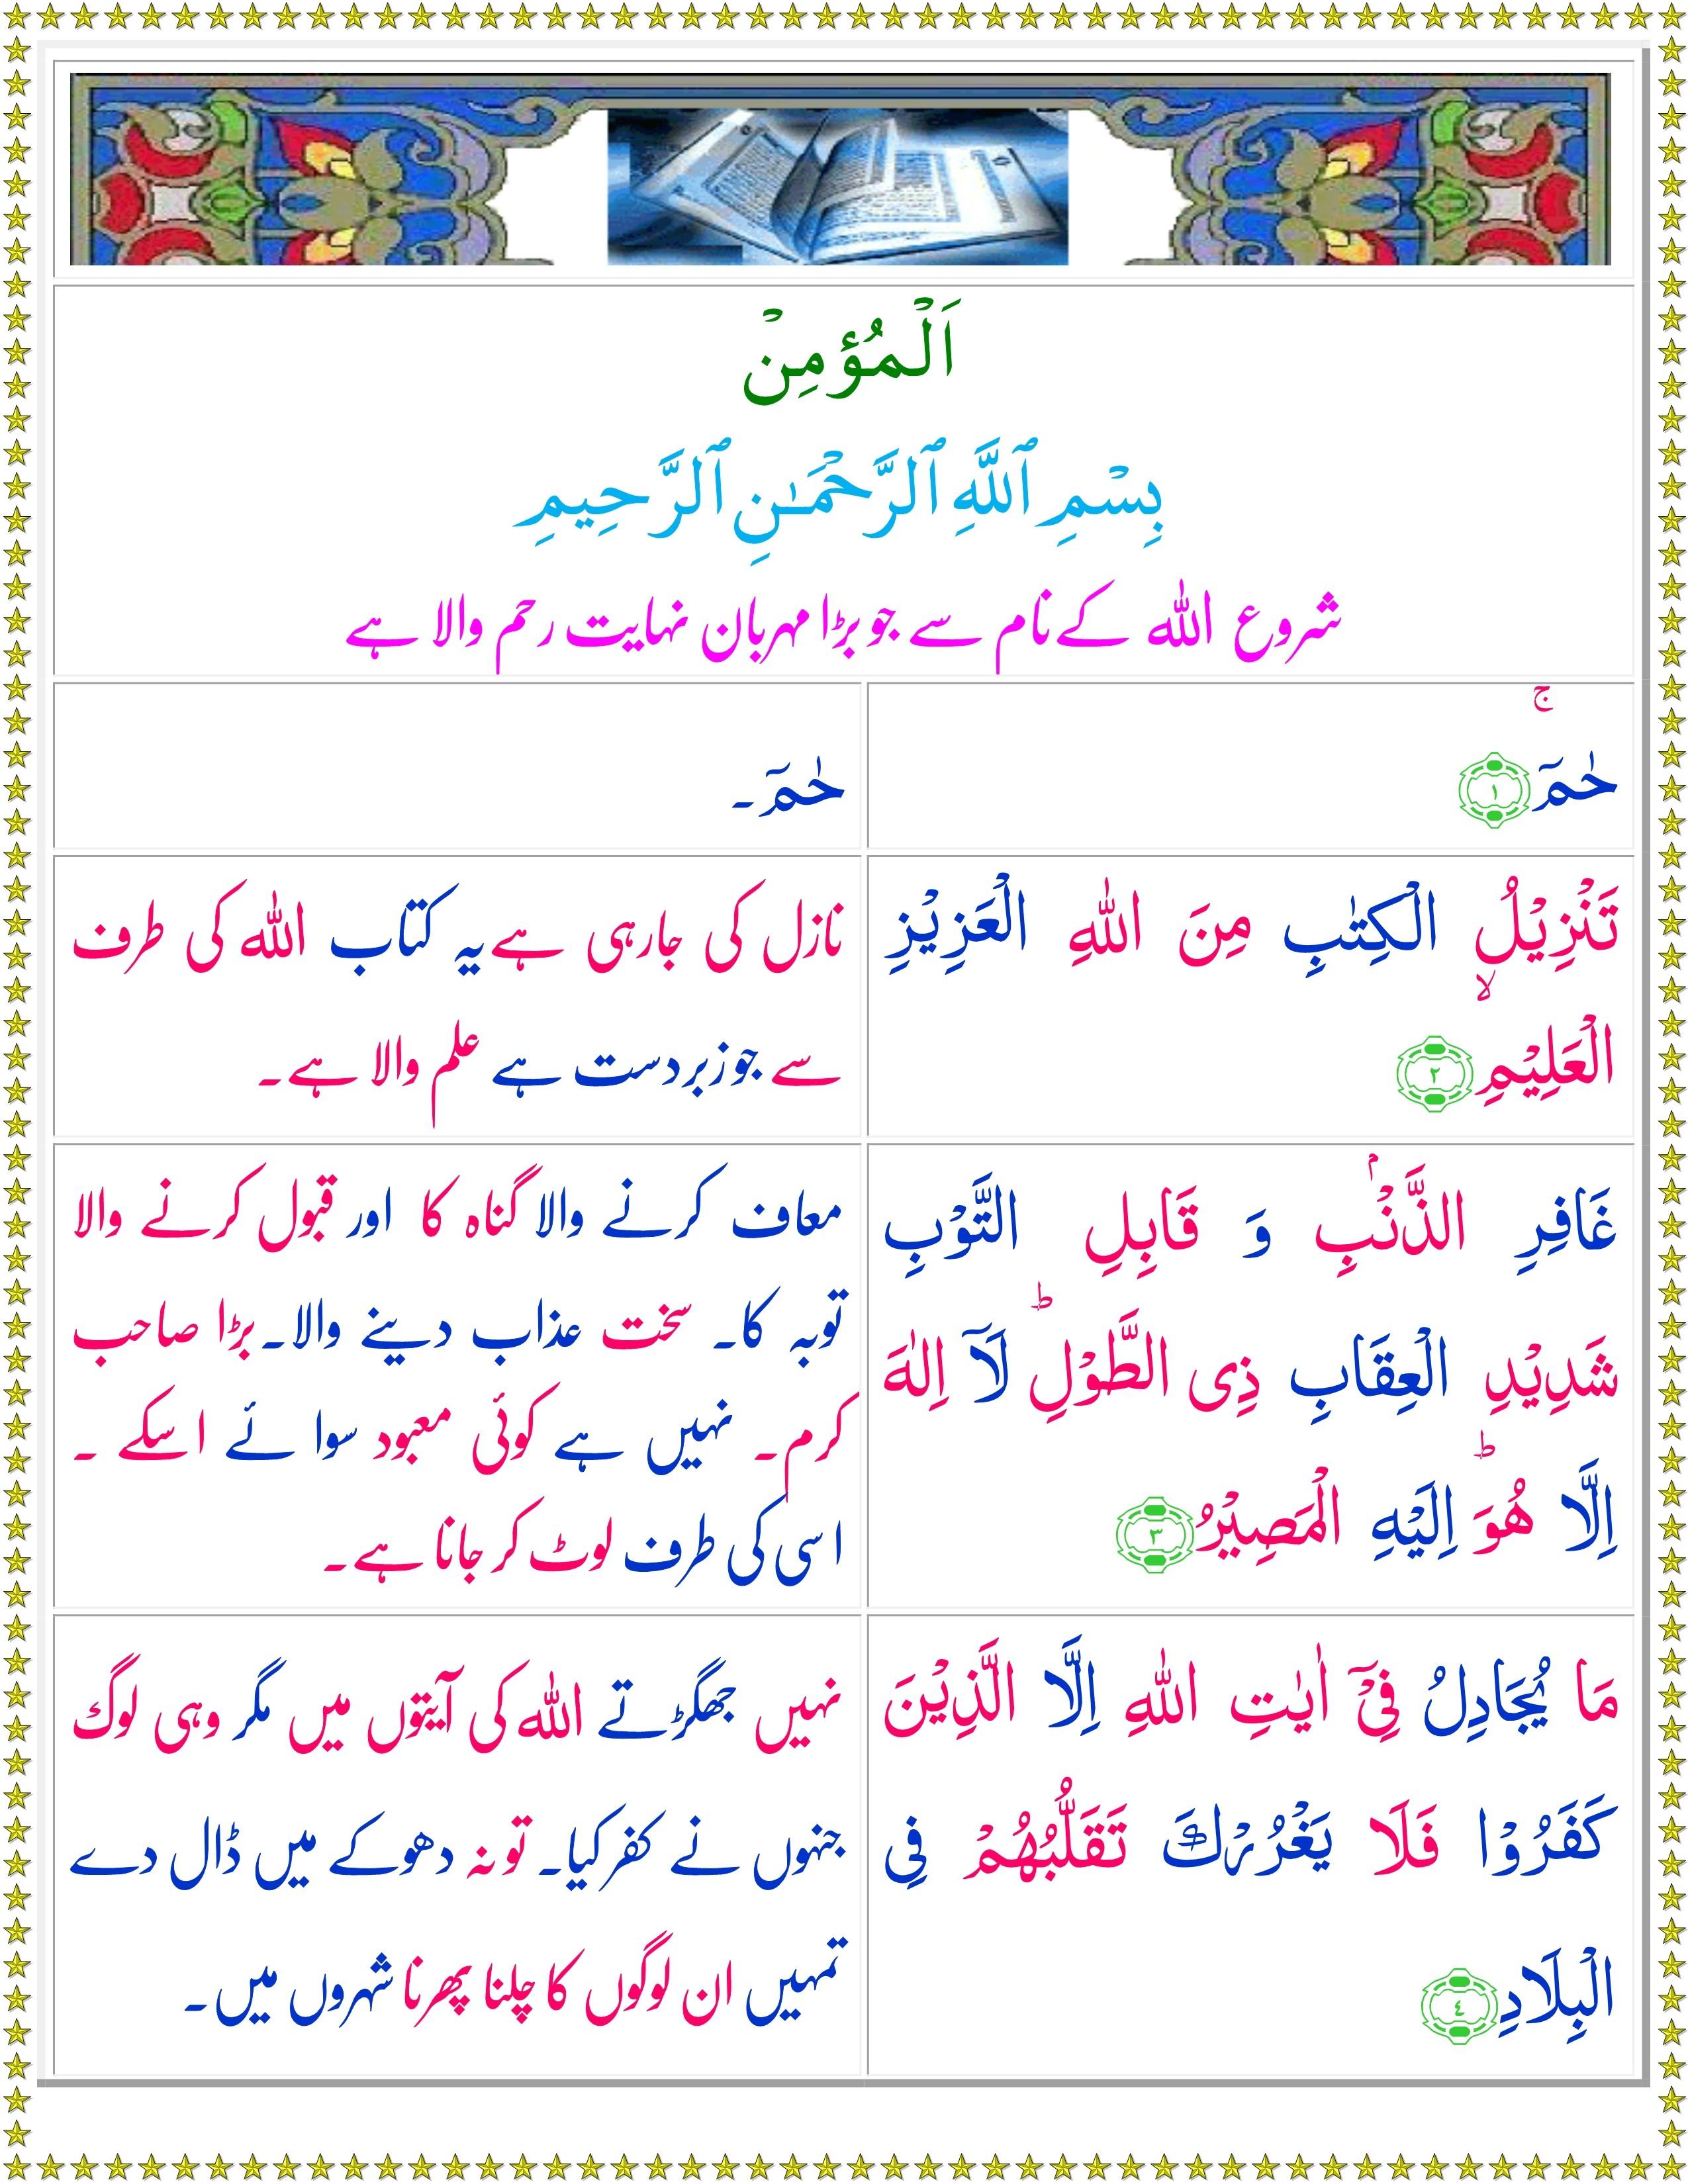 Qurani Ayat In Urdu Wallpapers - Surah Lail Translation In Urdu - HD Wallpaper 